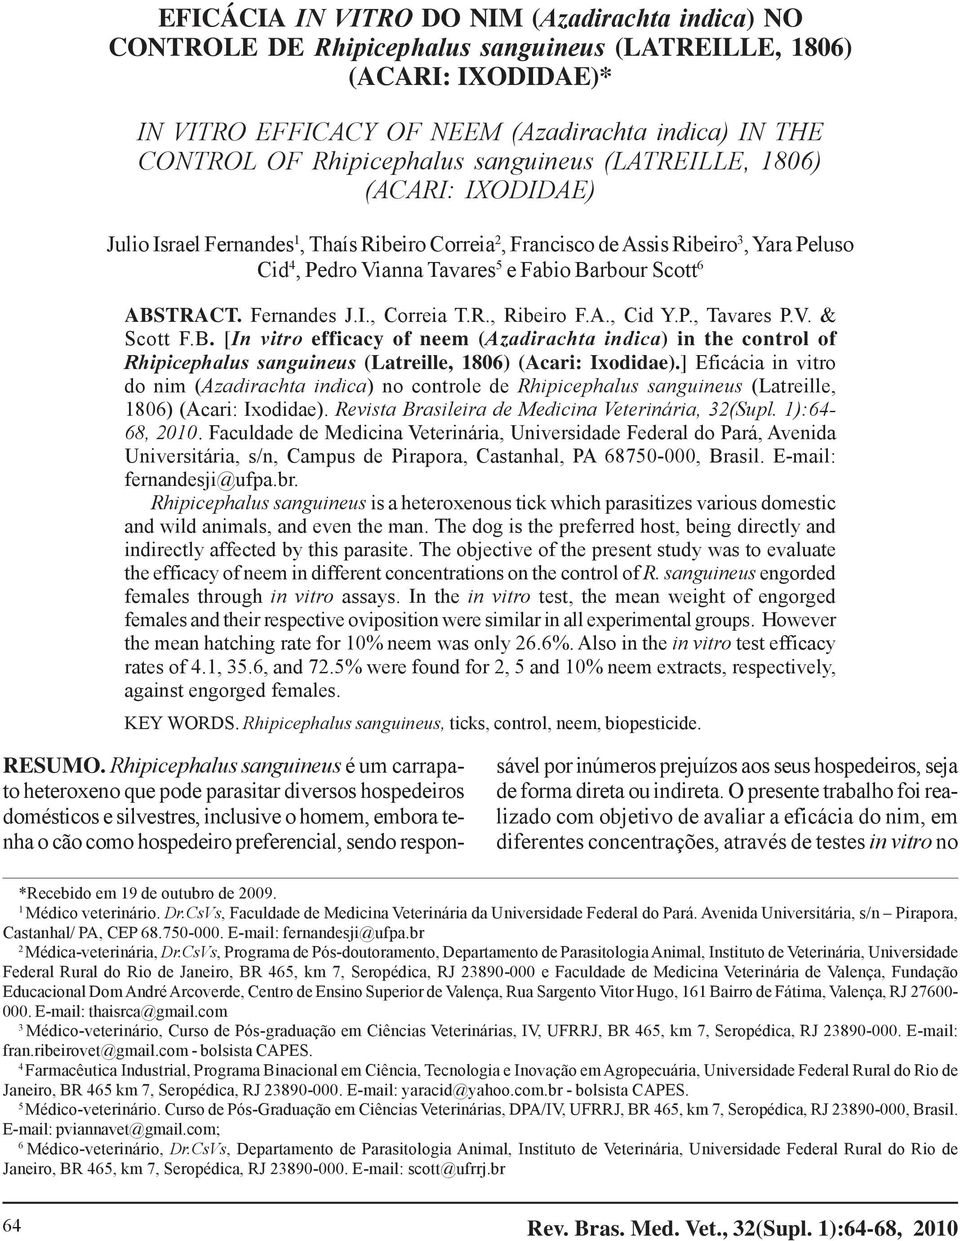 Scott 6 ABSTRACT. Fernandes J.I., Correia T.R., Ribeiro F.A., Cid Y.P., Tavares P.V. & Scott F.B. [In vitro efficacy of neem (Azadirachta indica) in the control of Rhipicephalus sanguineus (Latreille, 1806) (Acari: Ixodidae).